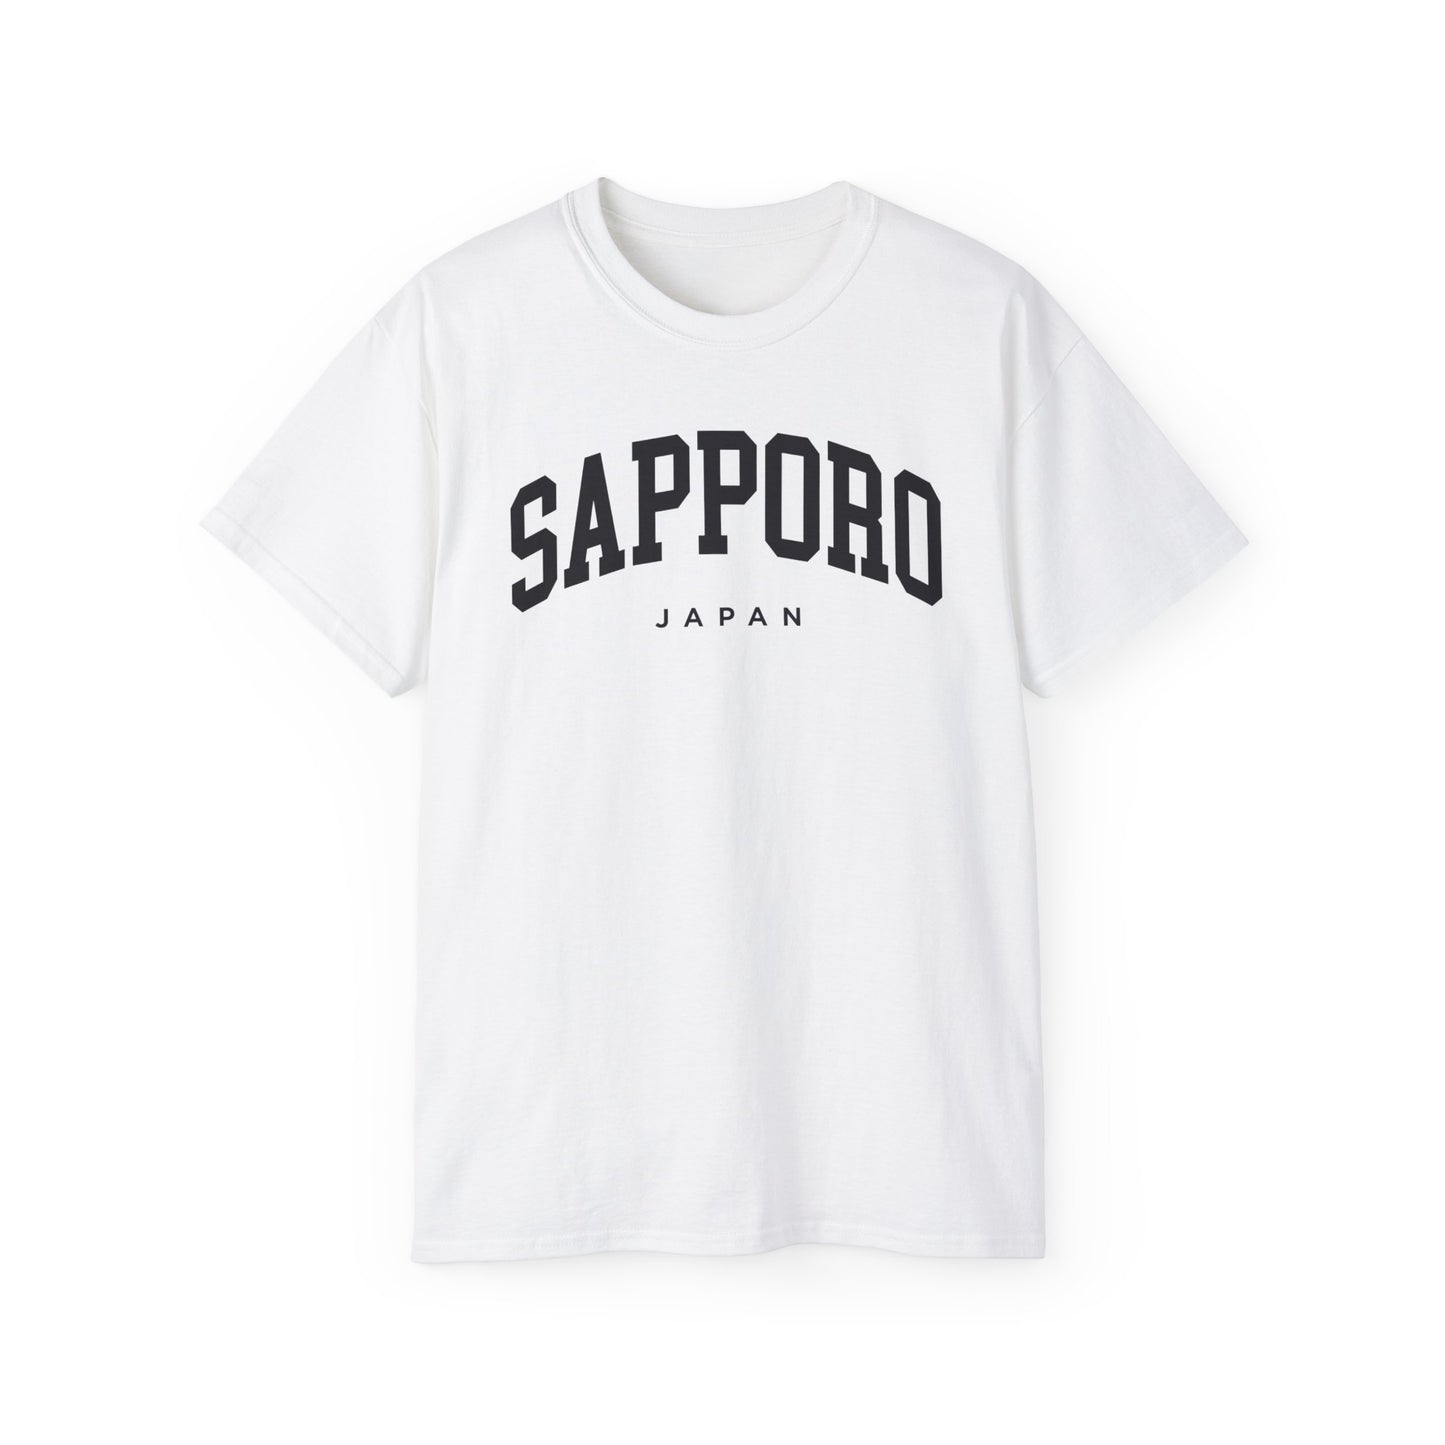 Sapporo Japan Tee